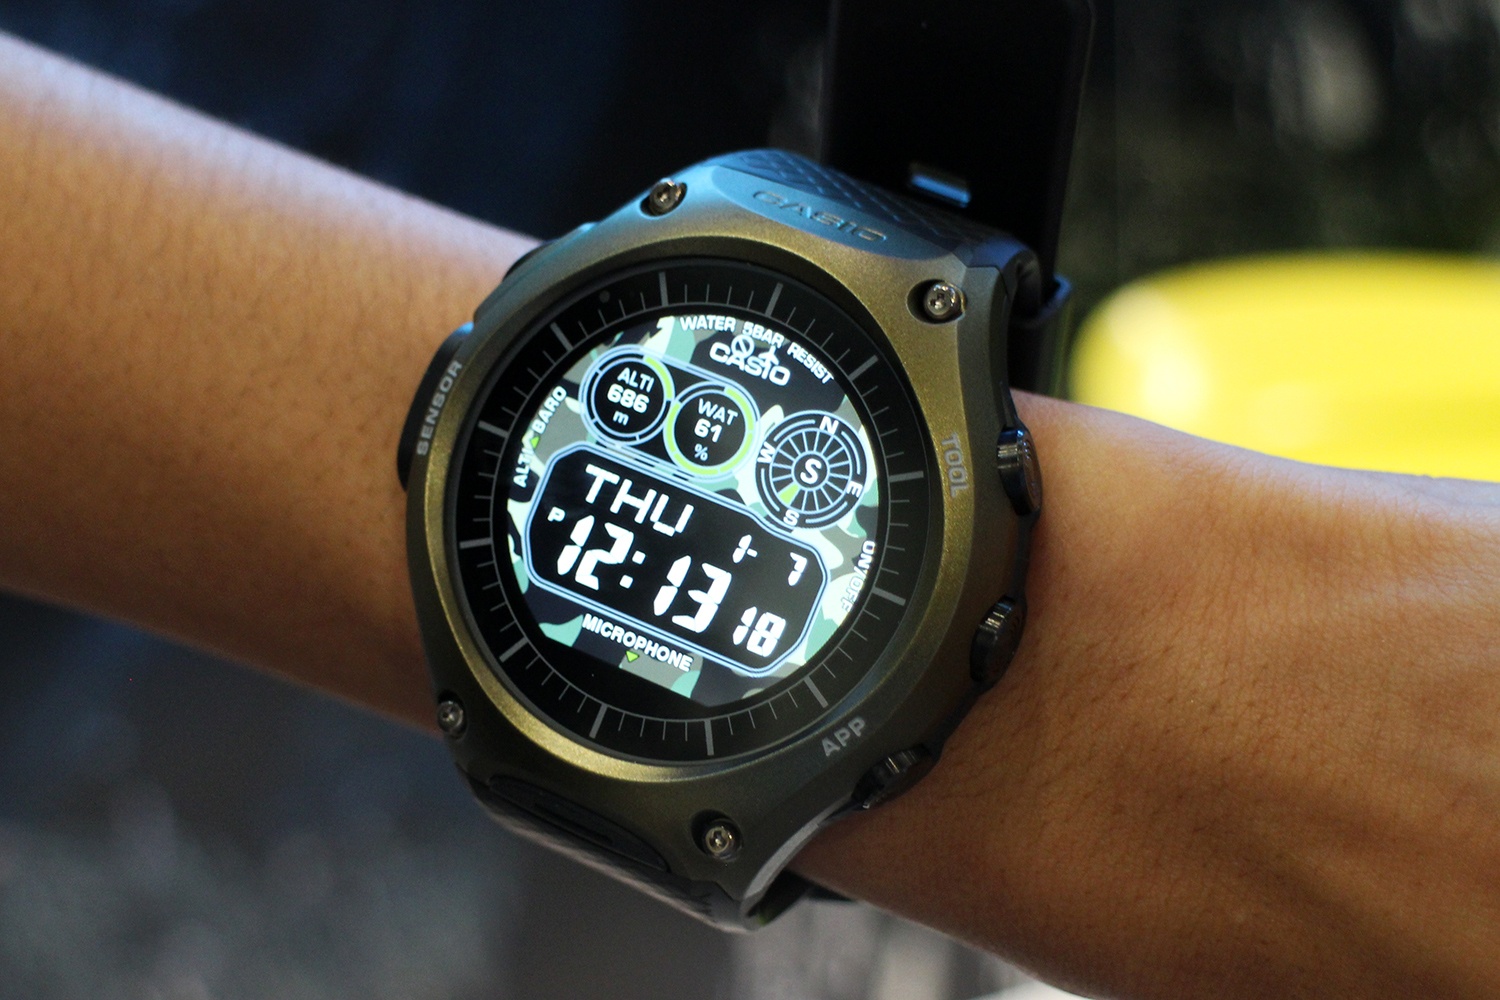 g shock smartwatch 2016 price